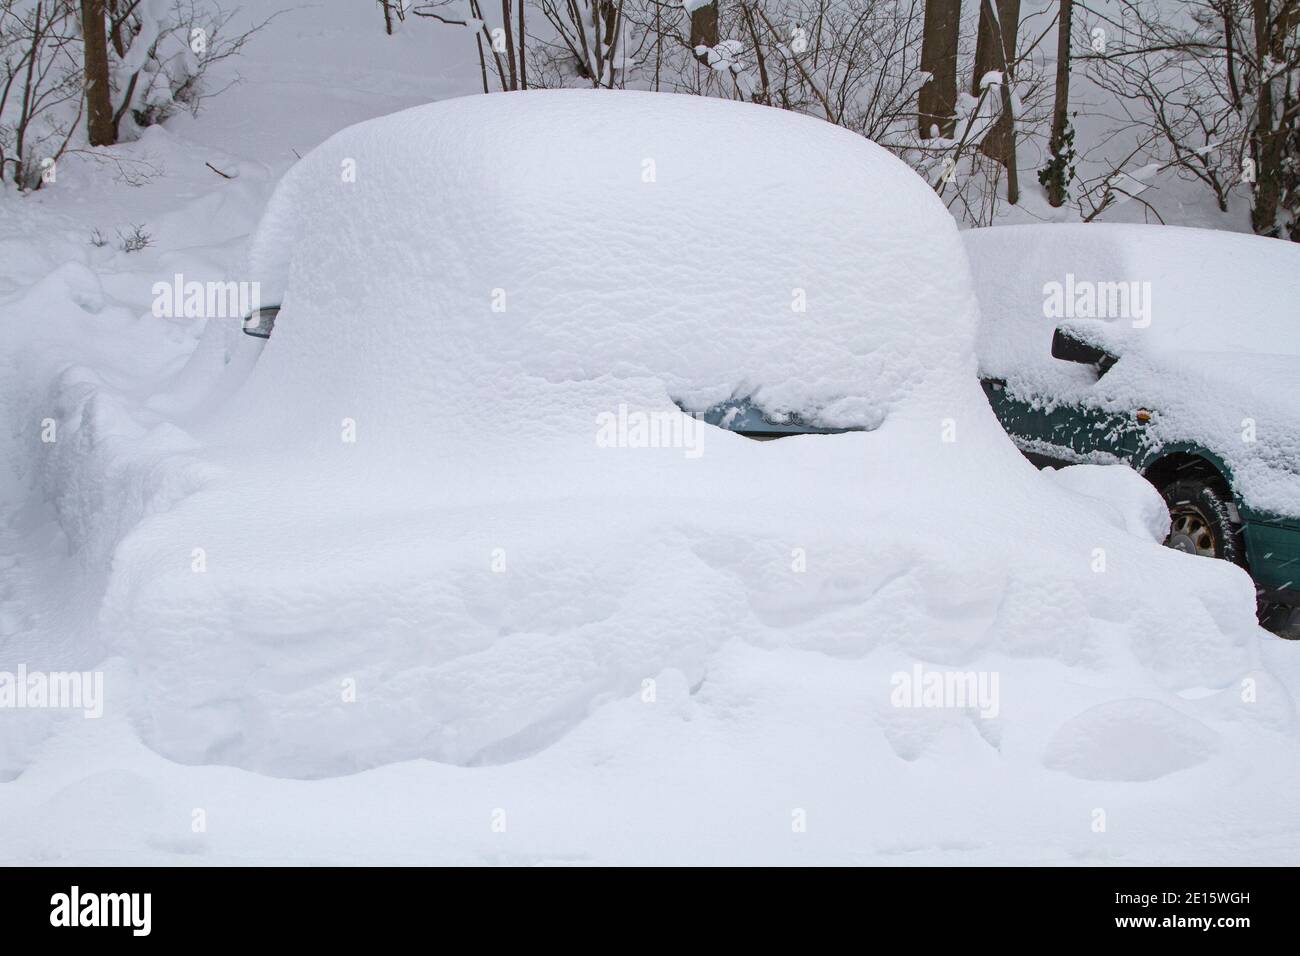 https://c8.alamy.com/compde/2e15wgh/desaster-winter-2019-geparktes-auto-versteckt-unter-dichtem-schnee-abdeckung-2e15wgh.jpg